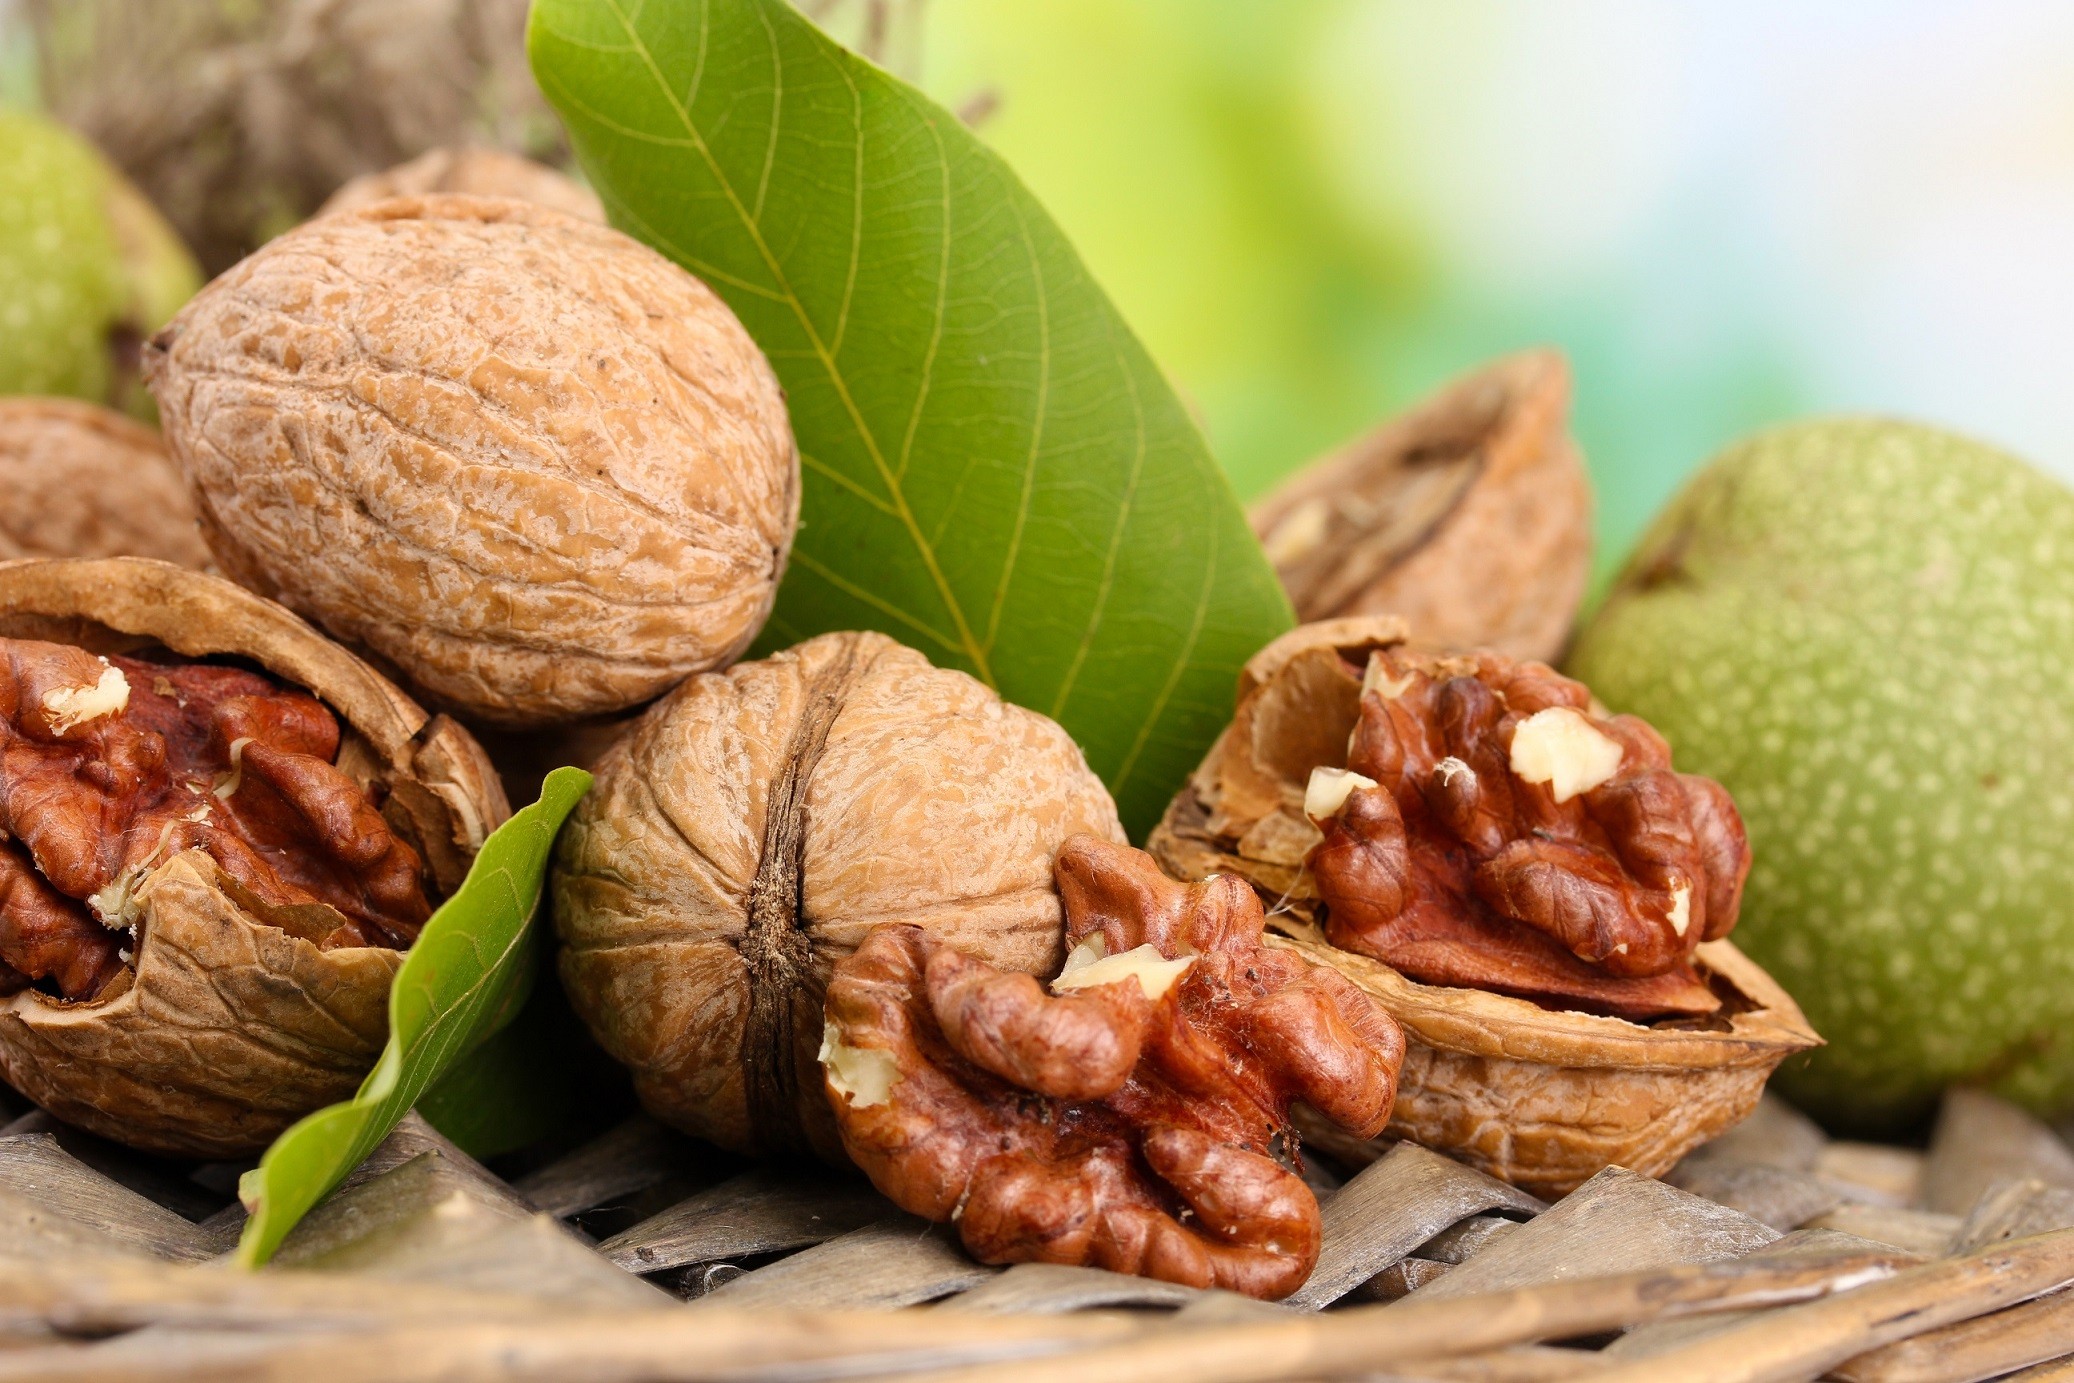 6 Incredible Health Benefits of Walnuts